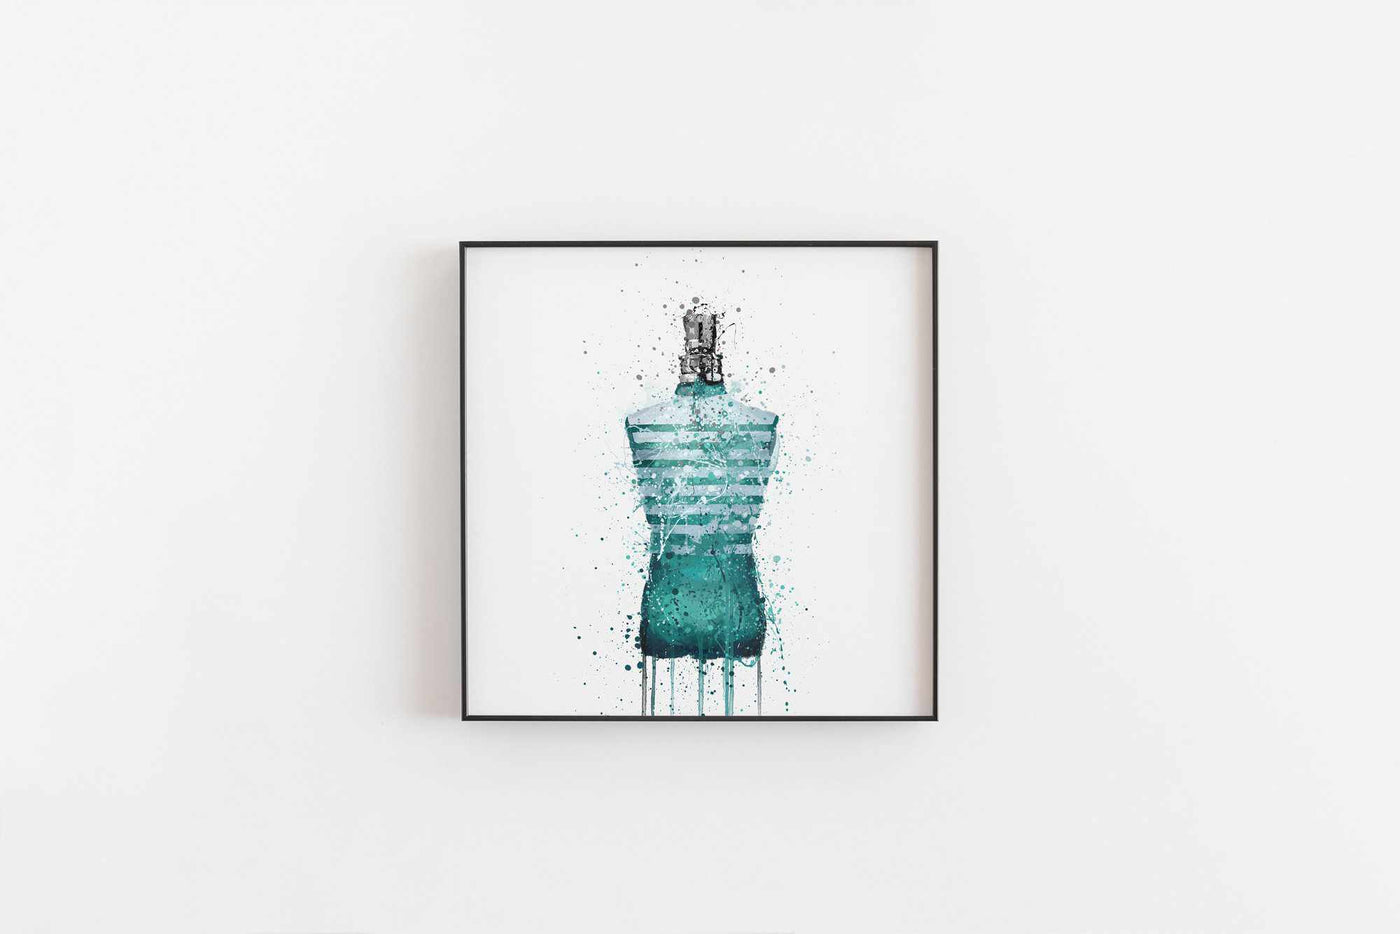 Fragrance Bottle Wall Art Print 'Poseidon'